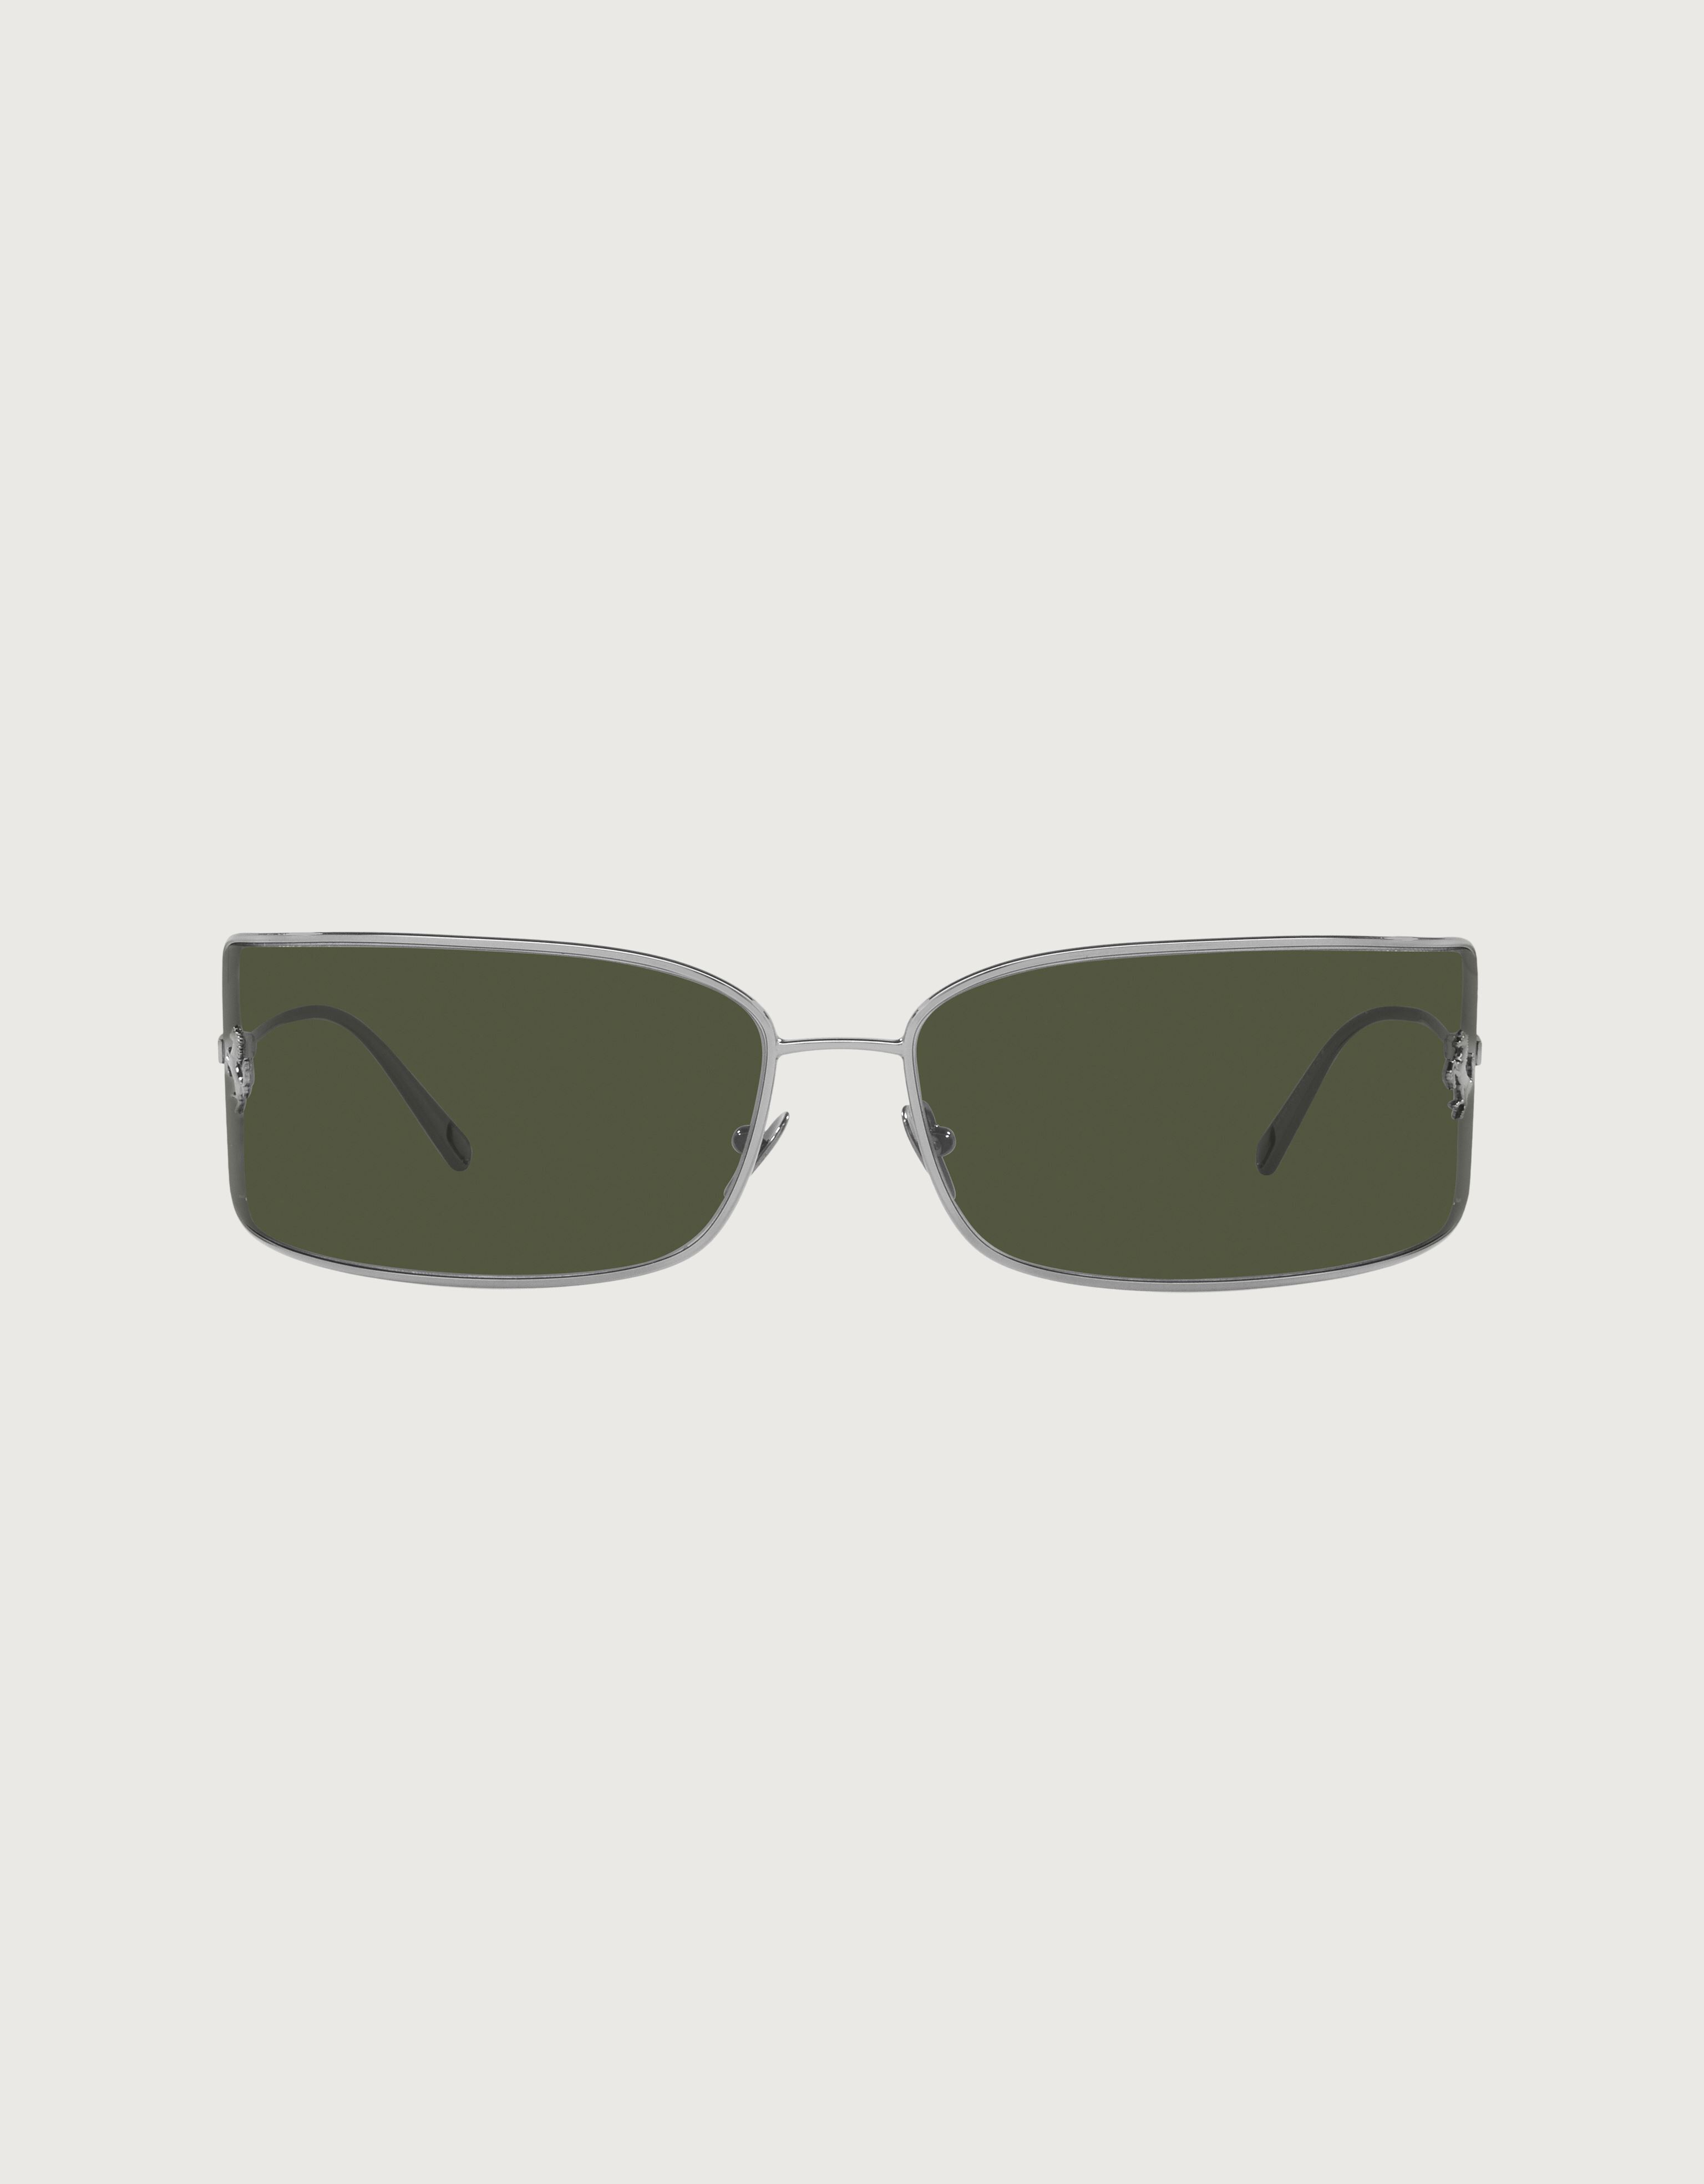 Ferrari Ferrari shield sunglasses with green lenses 深灰色 F0641f